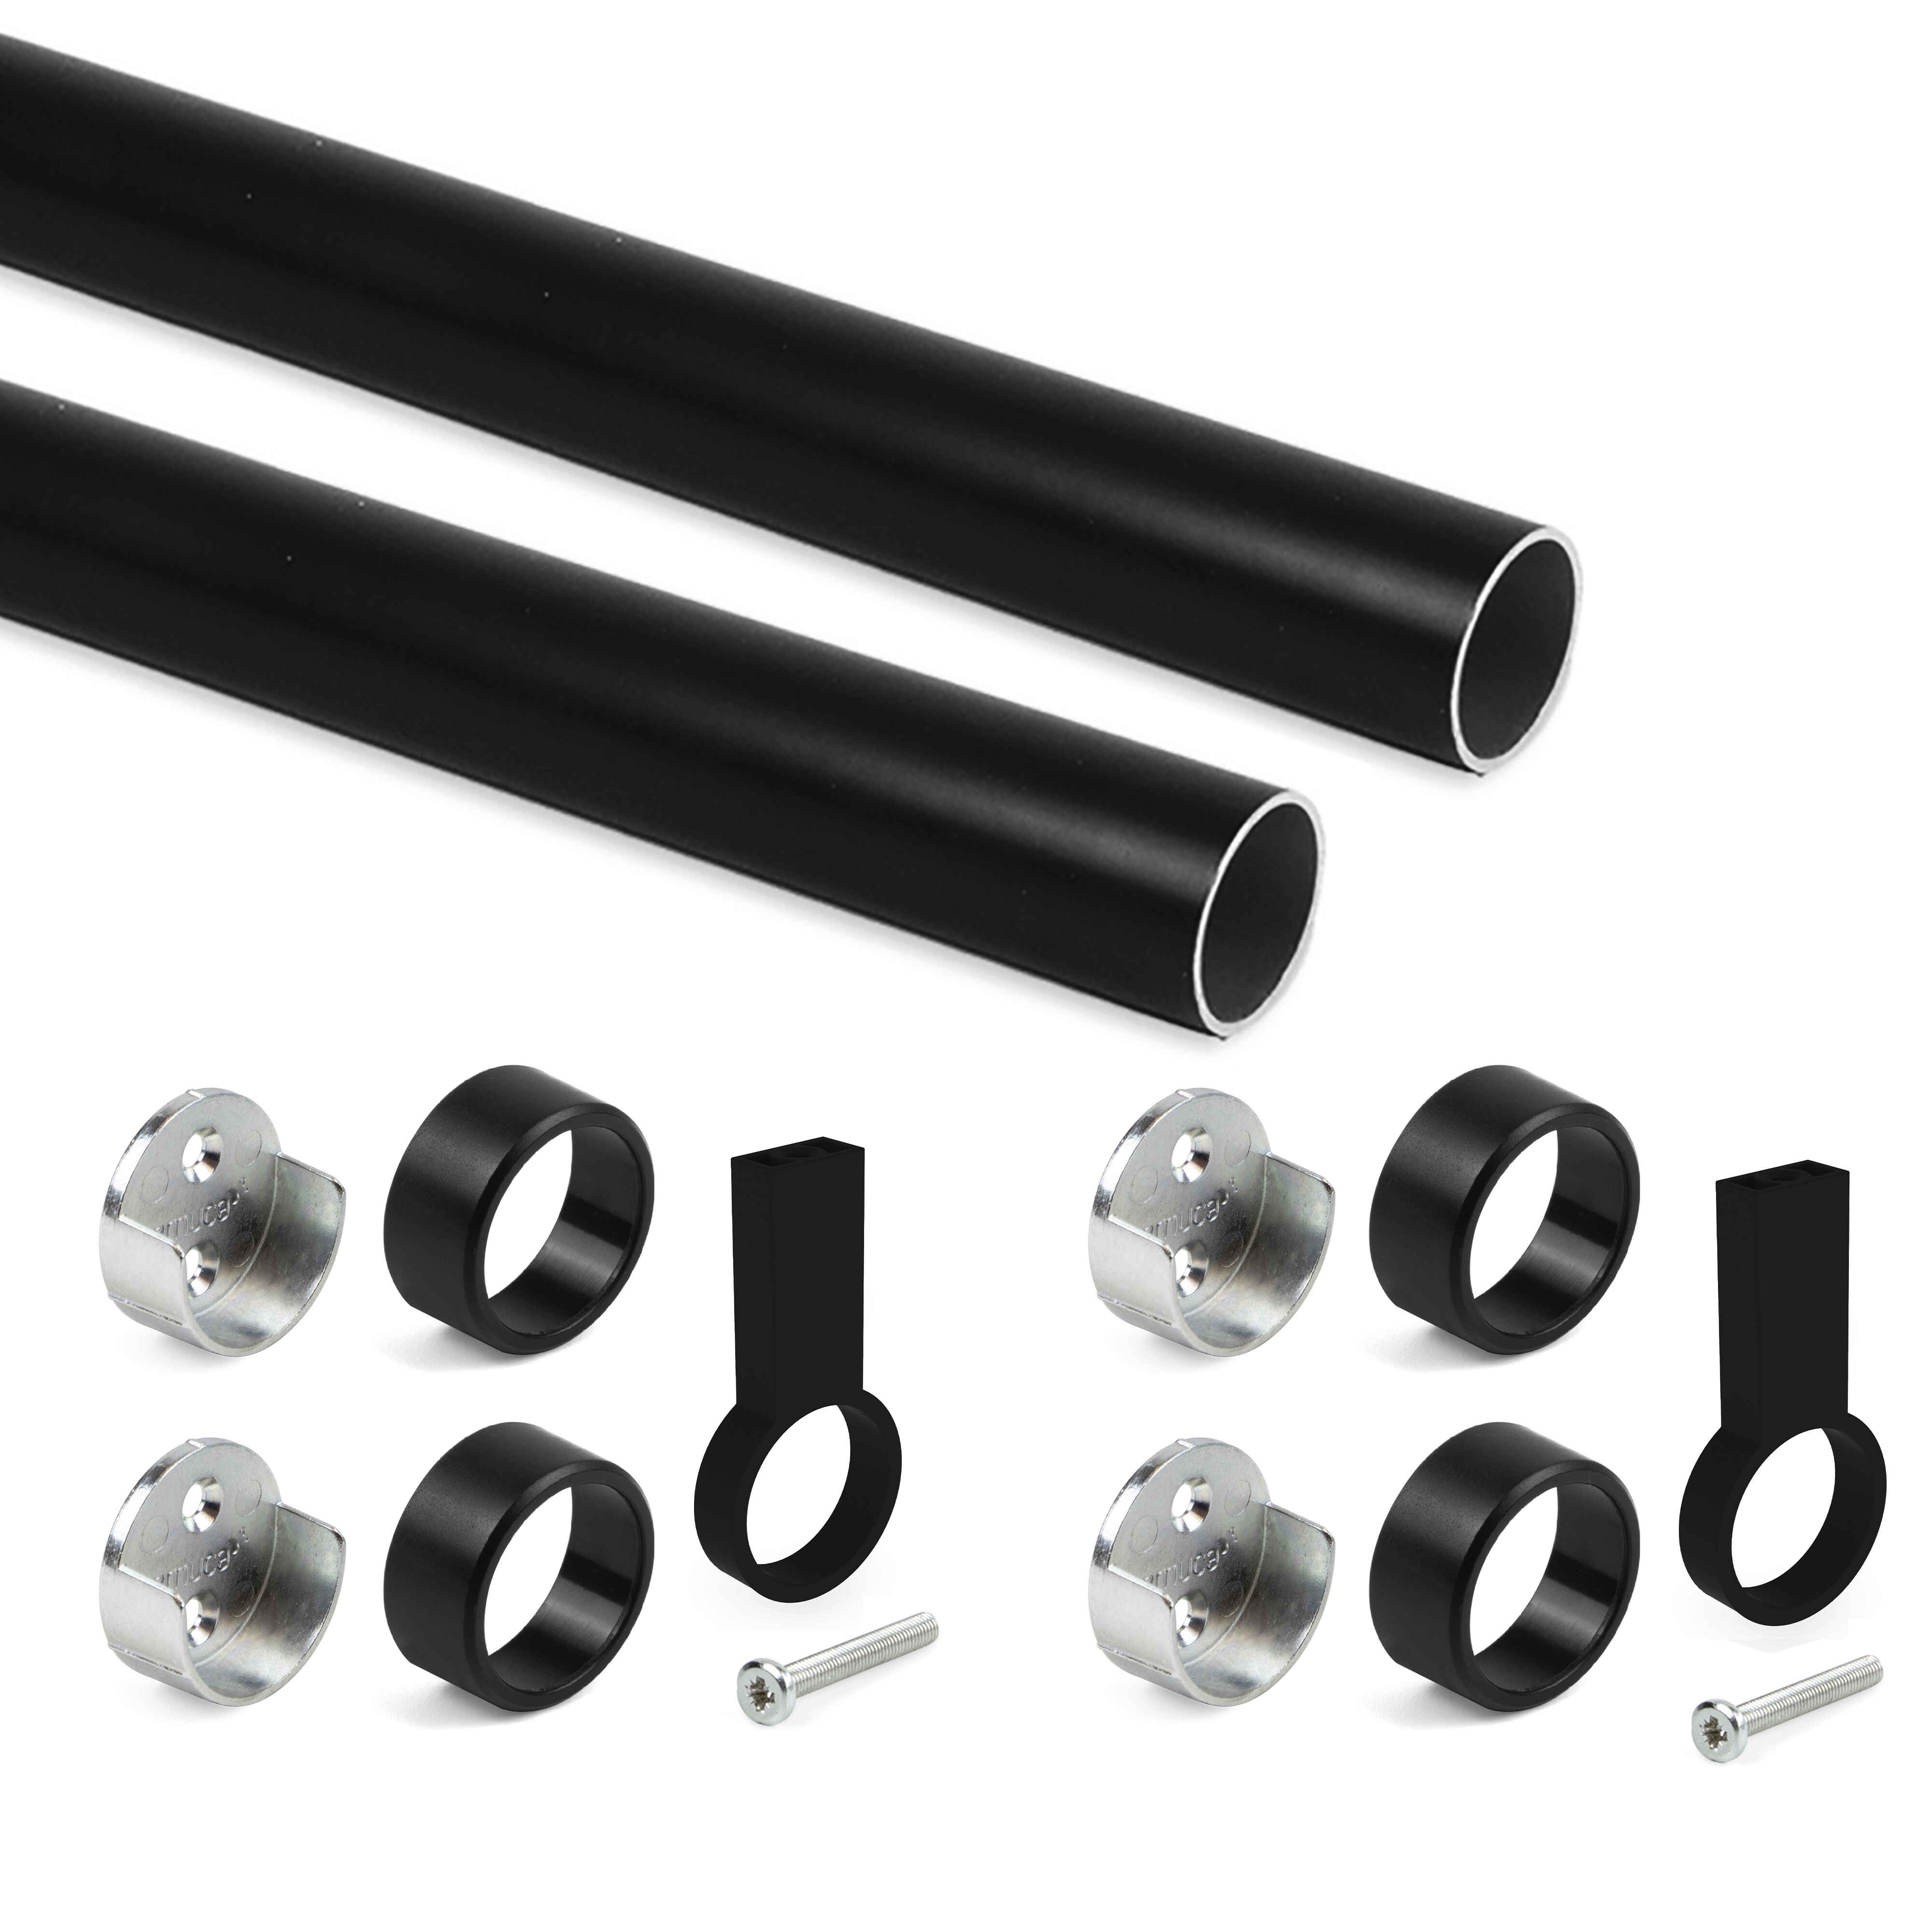 Kit de barra para armario redonda Ø28, 1,15 m, Pintado negro, Aluminio y Zamak